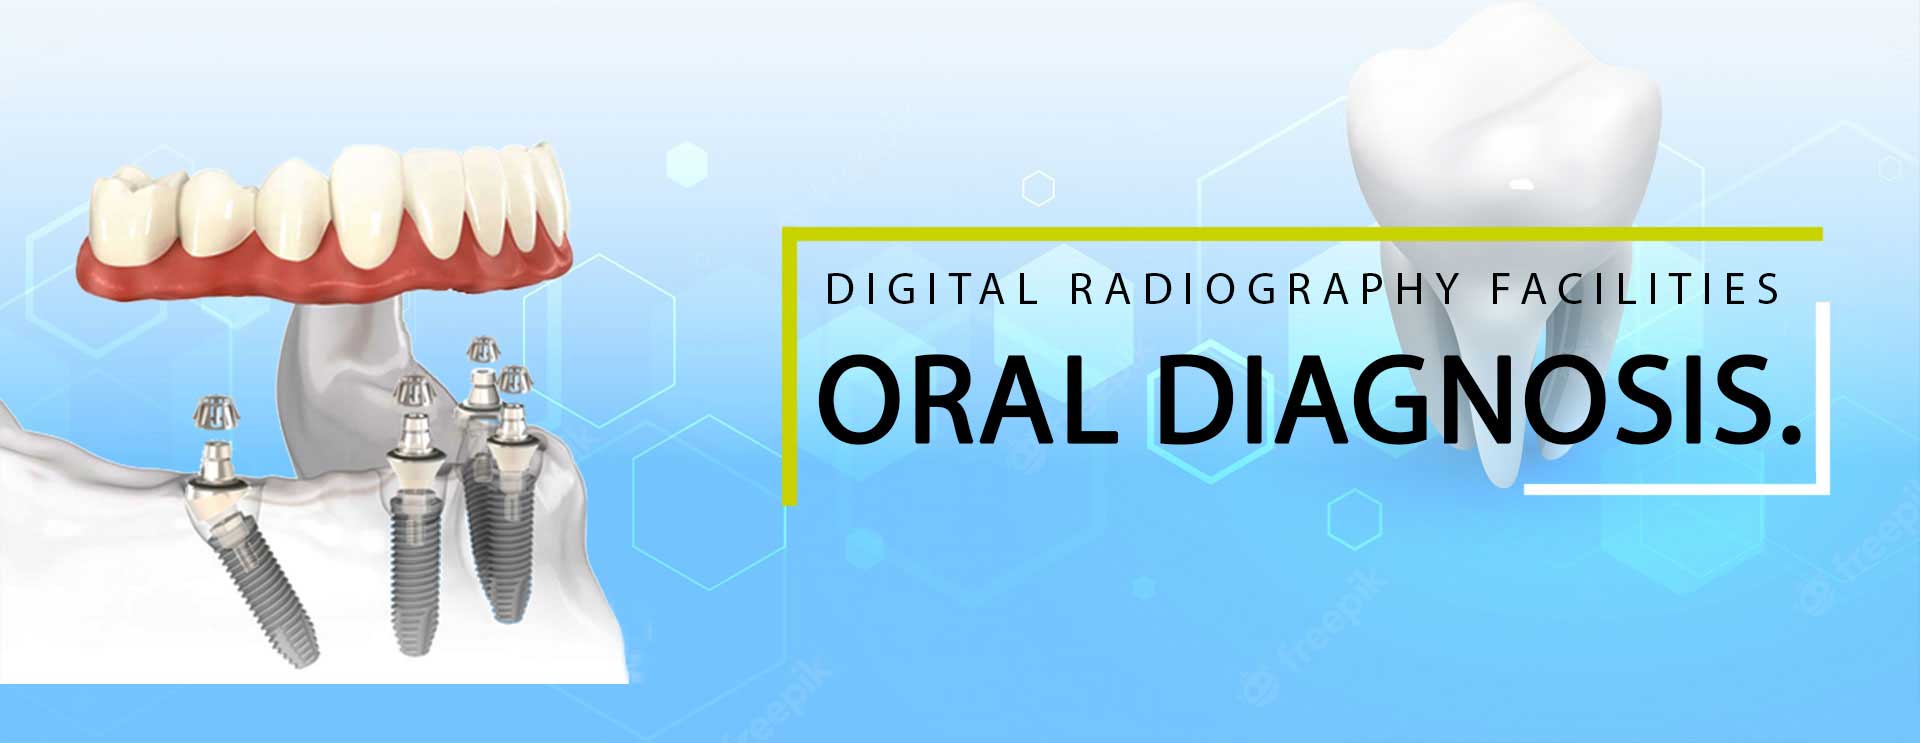 Oral Diagnosis in Hirabaugh